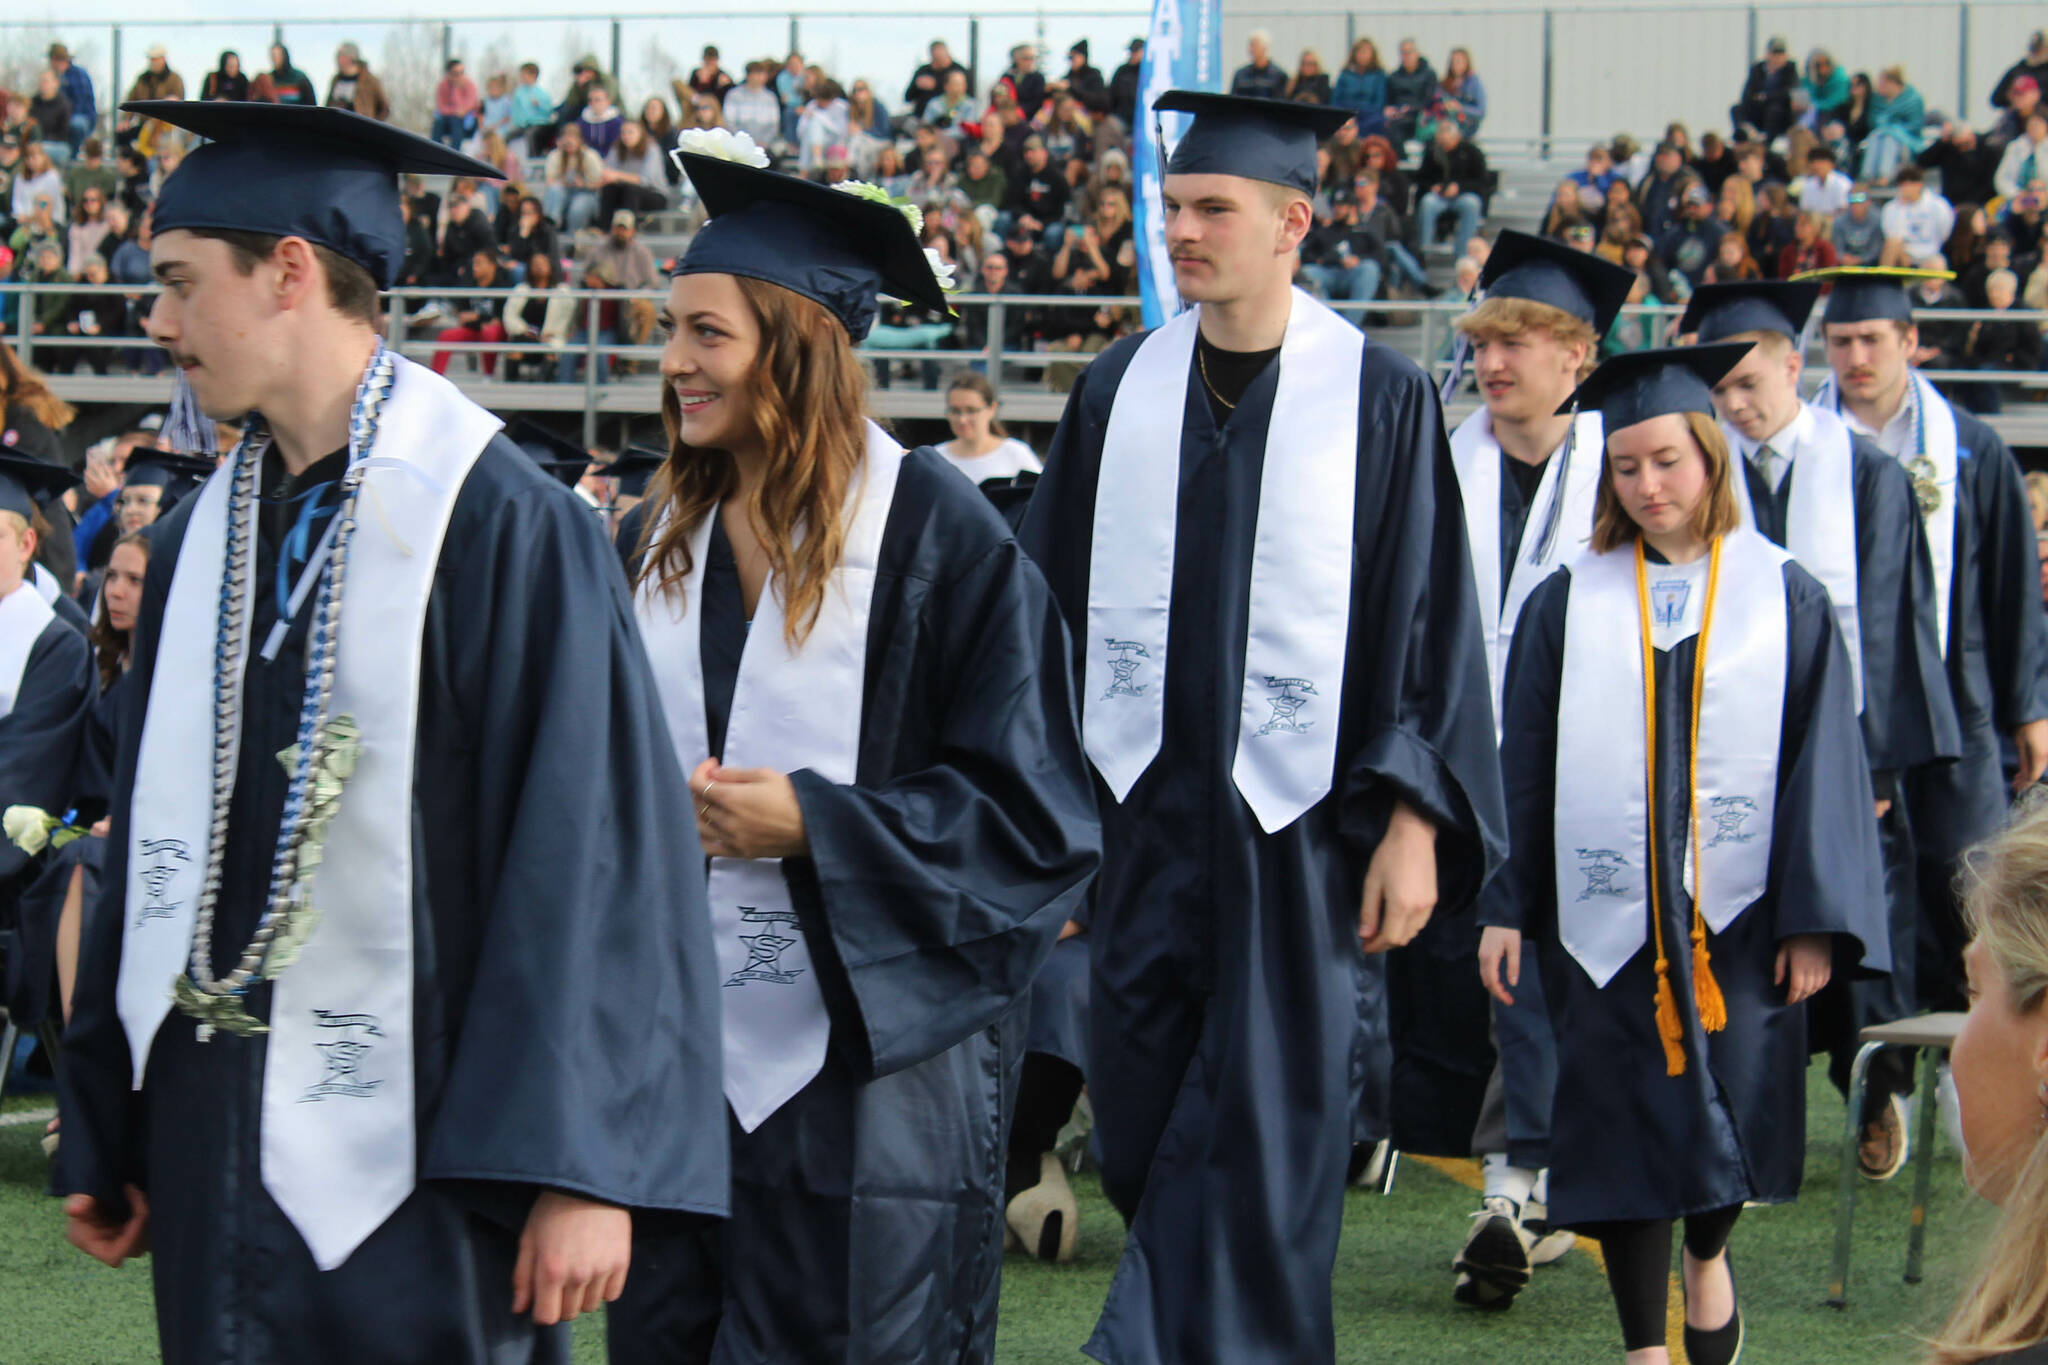 Soldotna High School graduates line up to receive diplomas during a ceremony on Monday, May 15, 2023, in Soldotna, Alaska. (Ashlyn O’Hara/Peninsula Clarion)